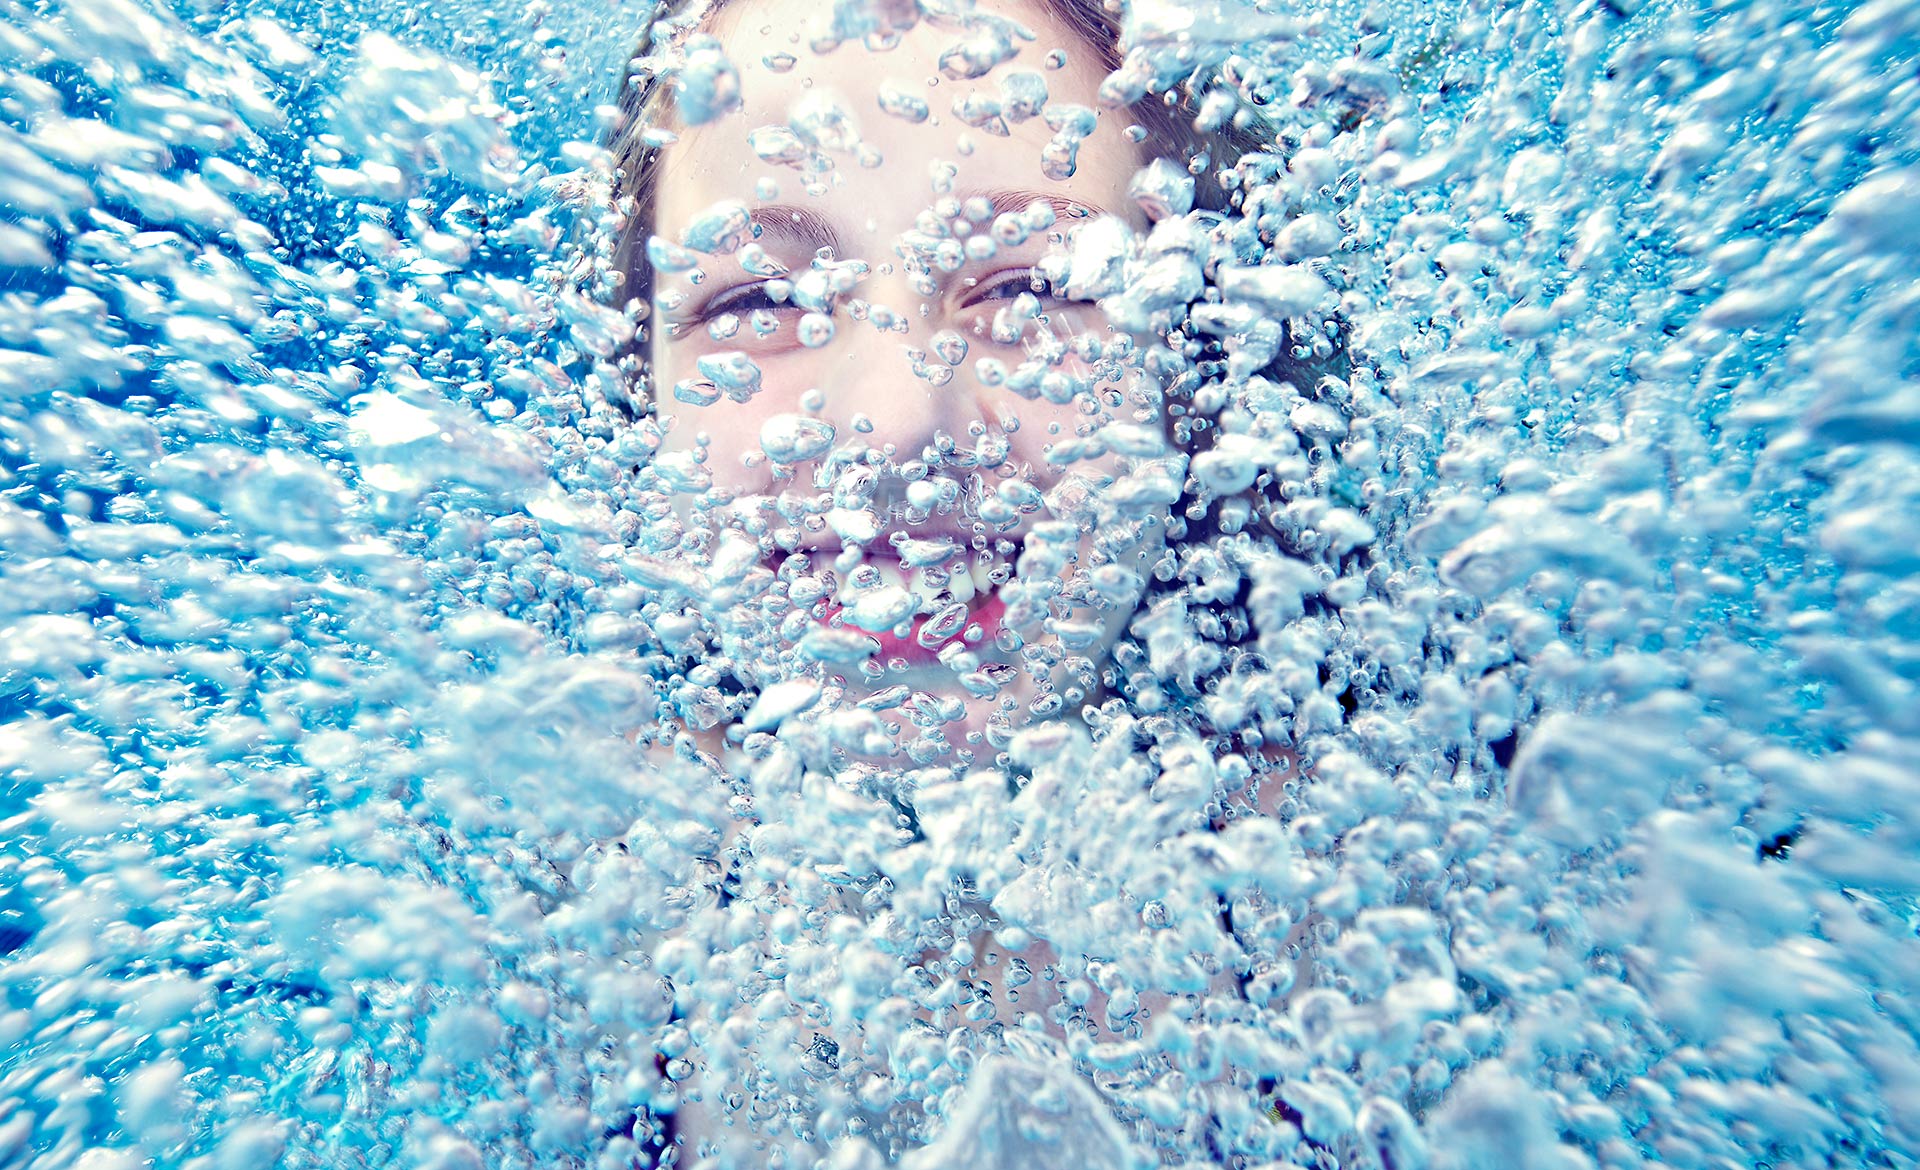 Girl laughing underwater